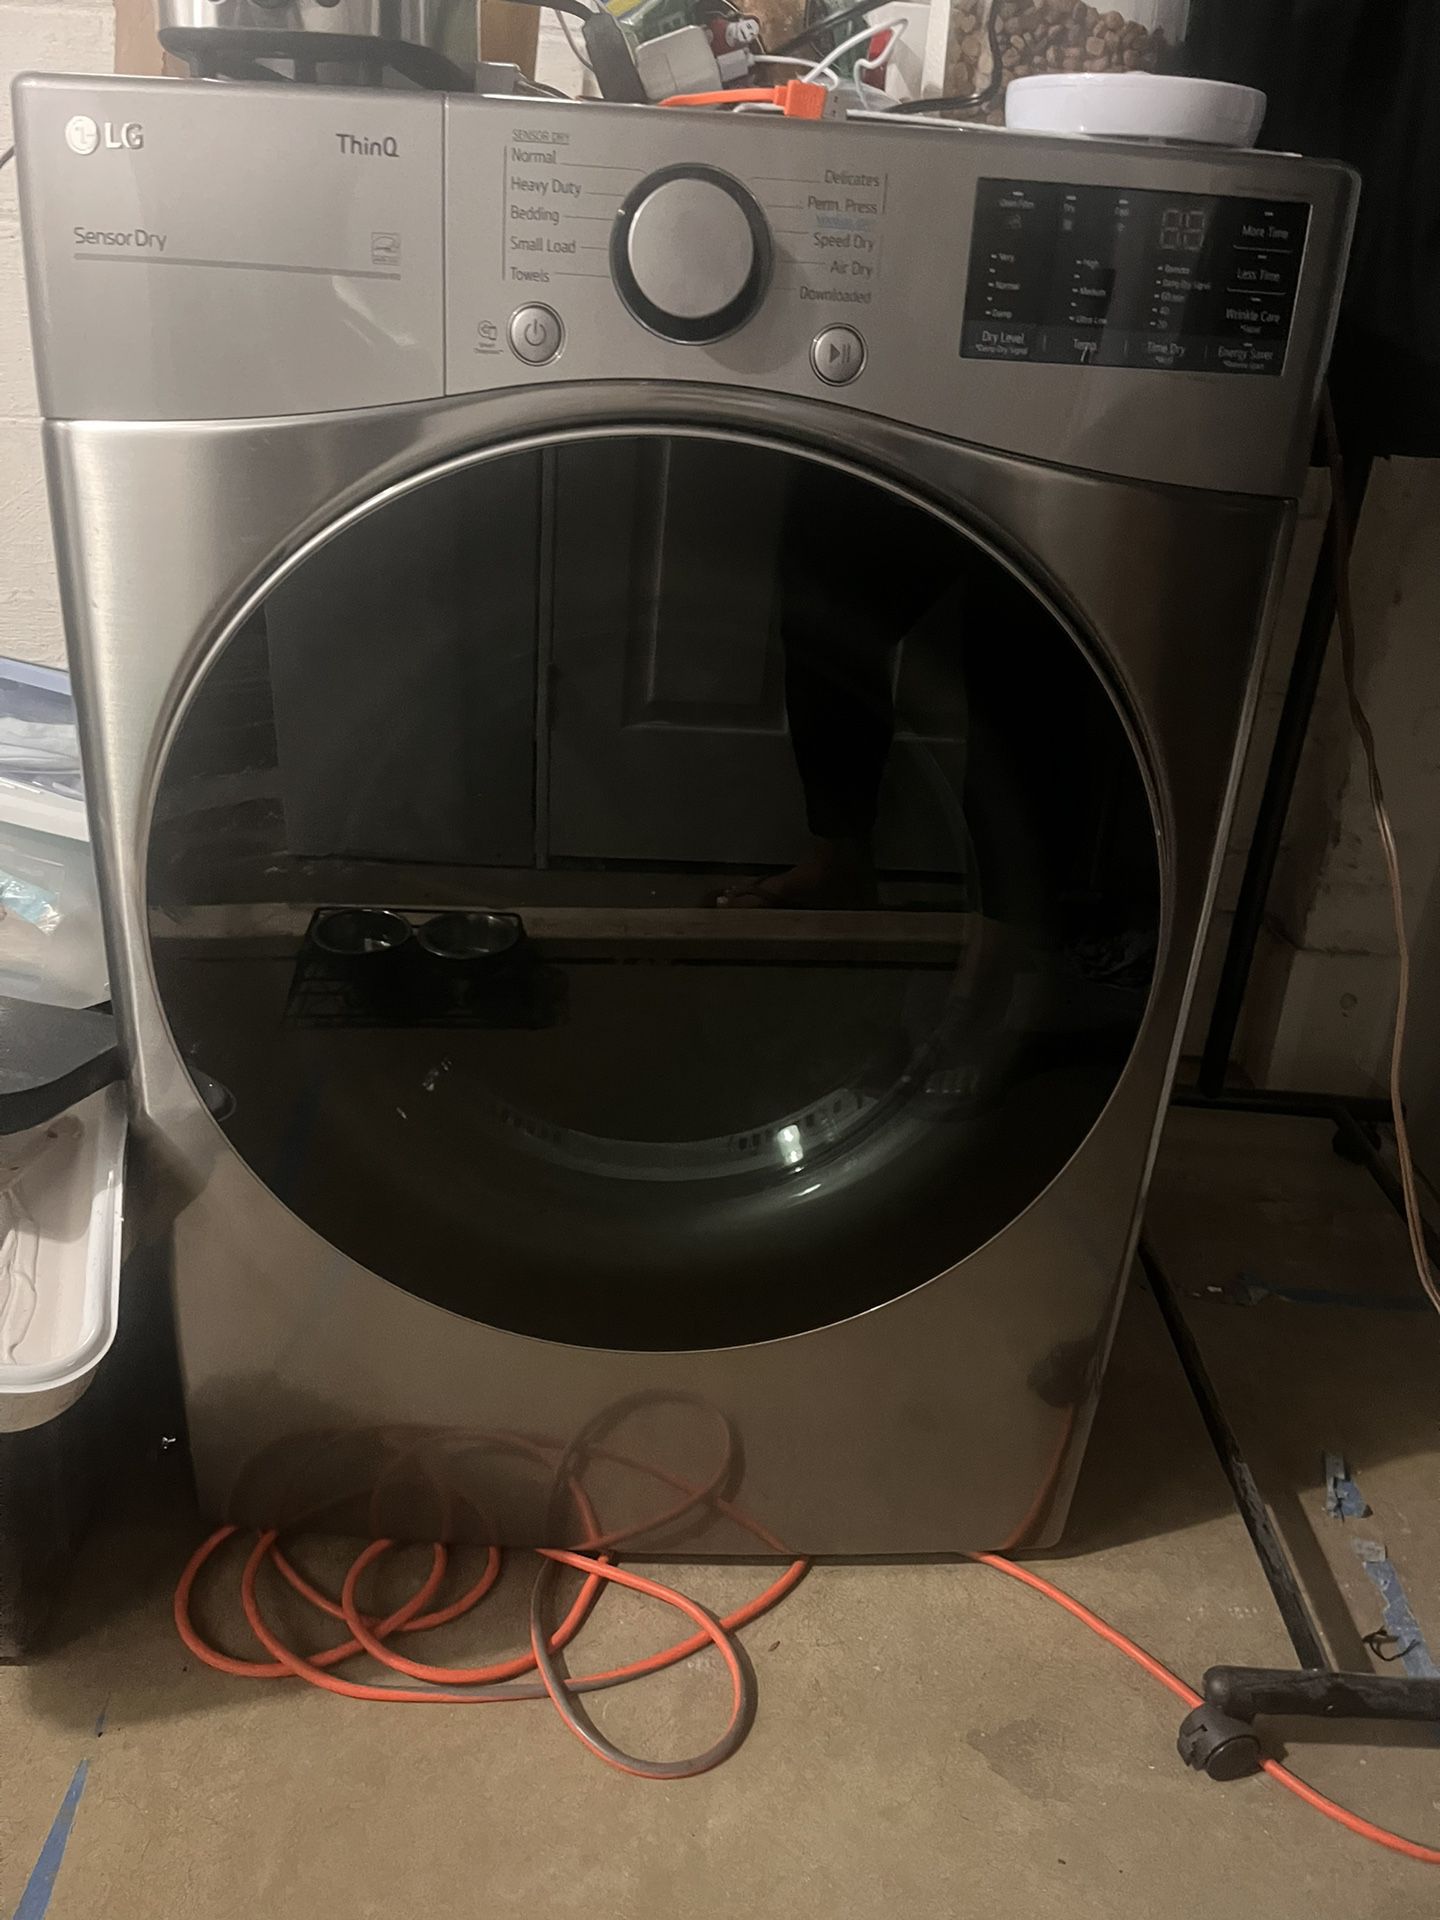 LG Thin Q Dryer (Electric)